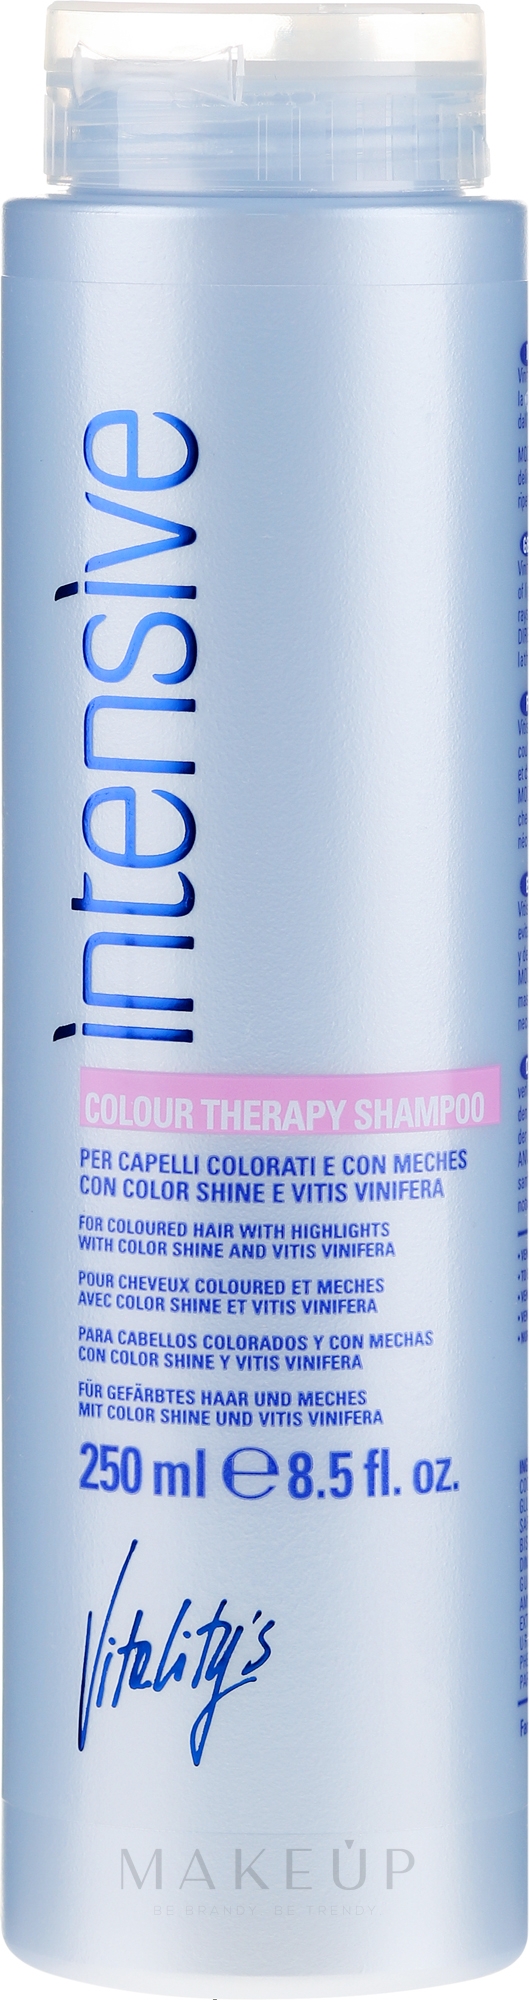 Farbschutz-Shampoo für coloriertes Haar - Vitality's Intensive Color Therapy Shampoo — Bild 250 ml